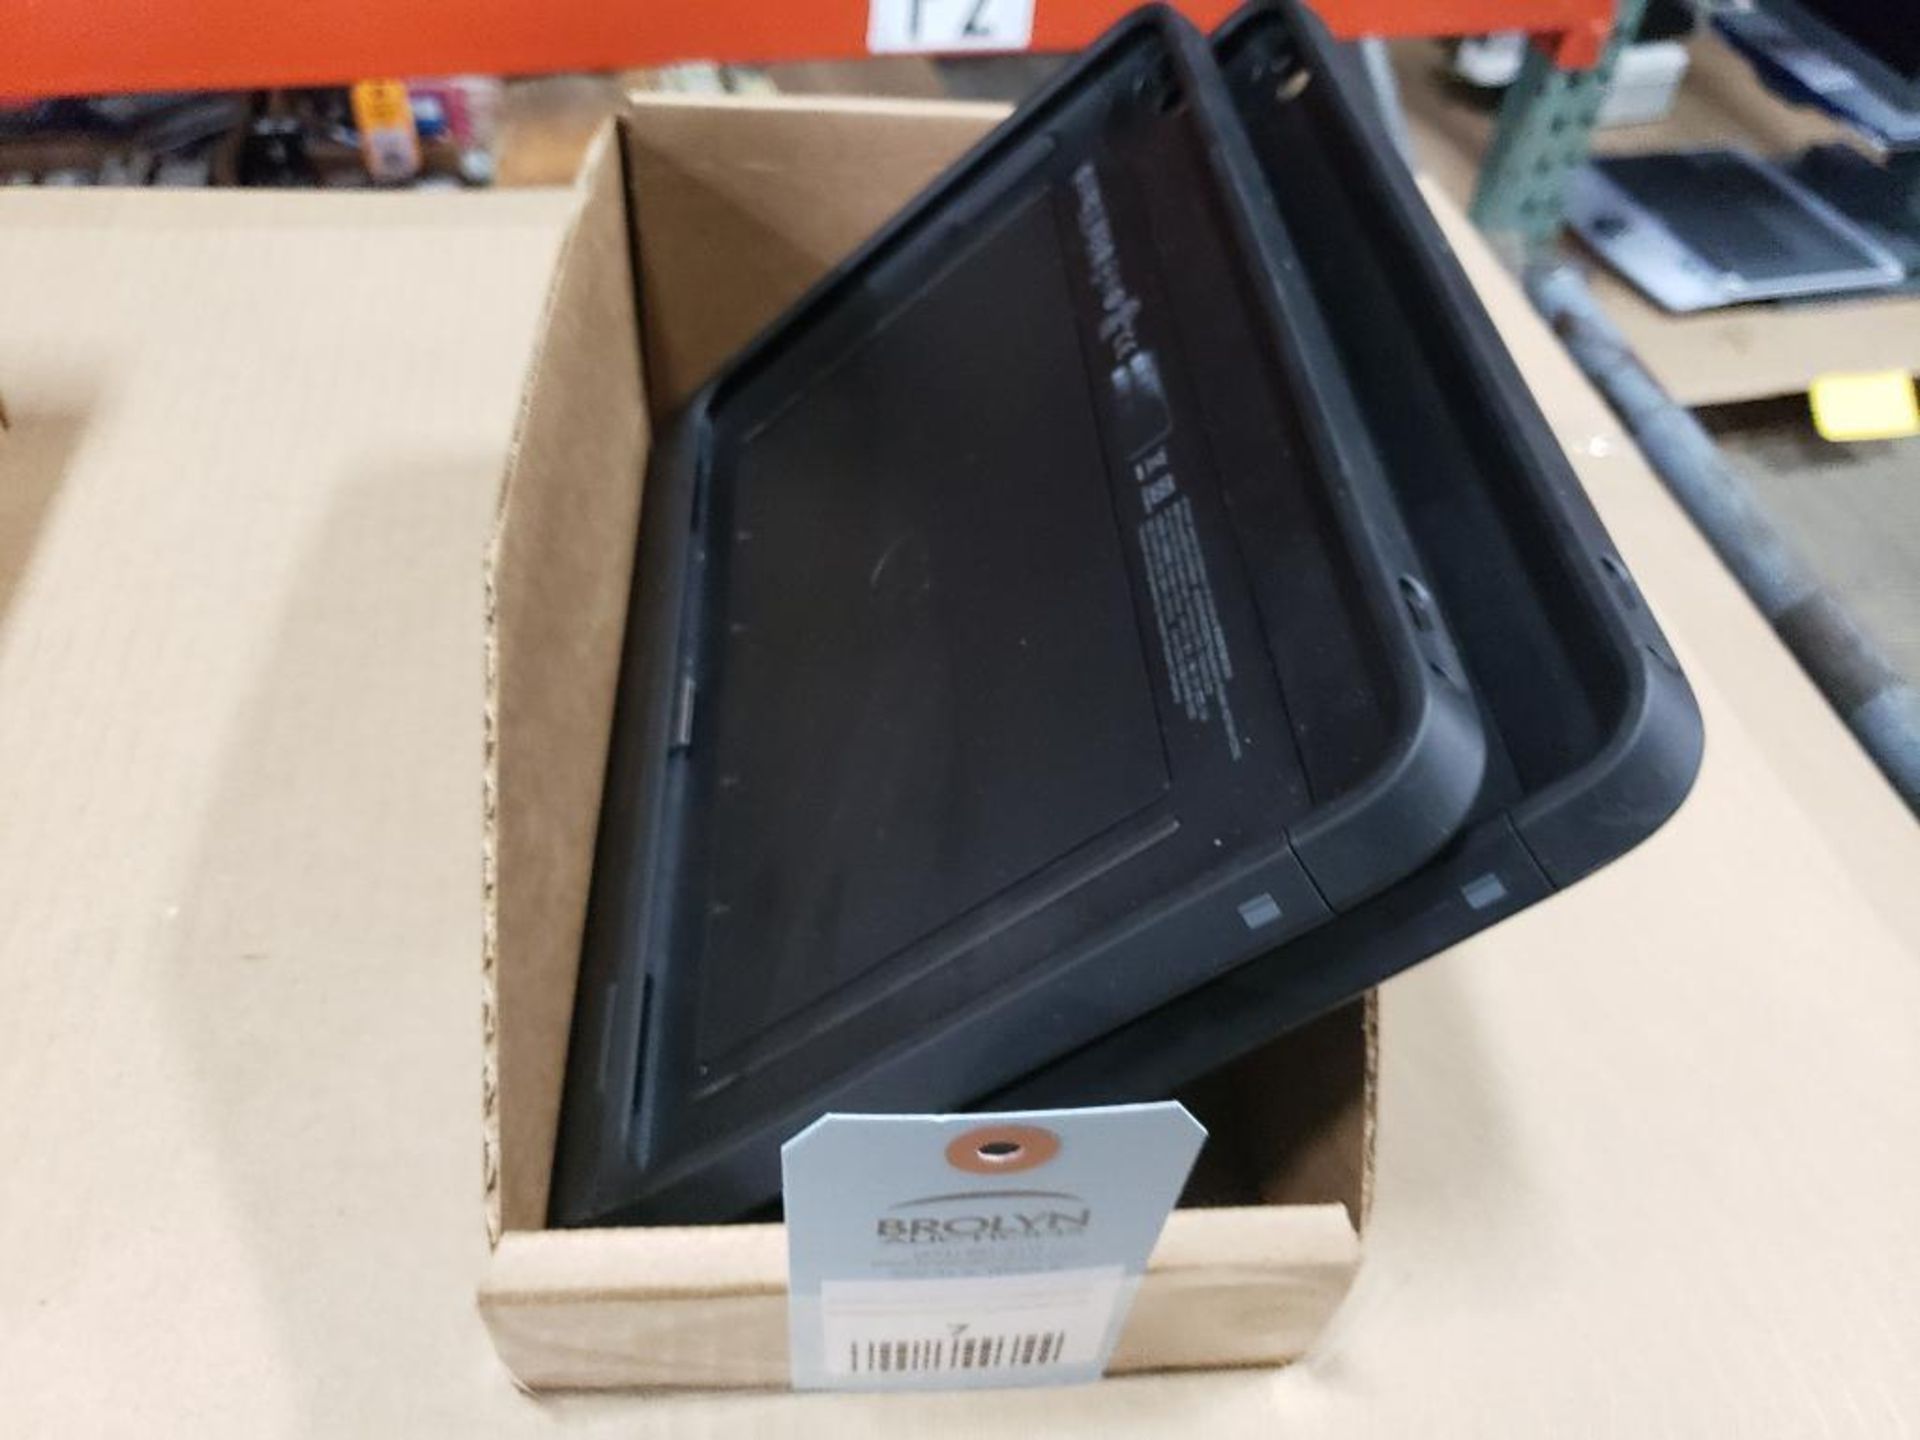 Qty 2 - HP Elitepad 1100 G2 10.1 tablet case.